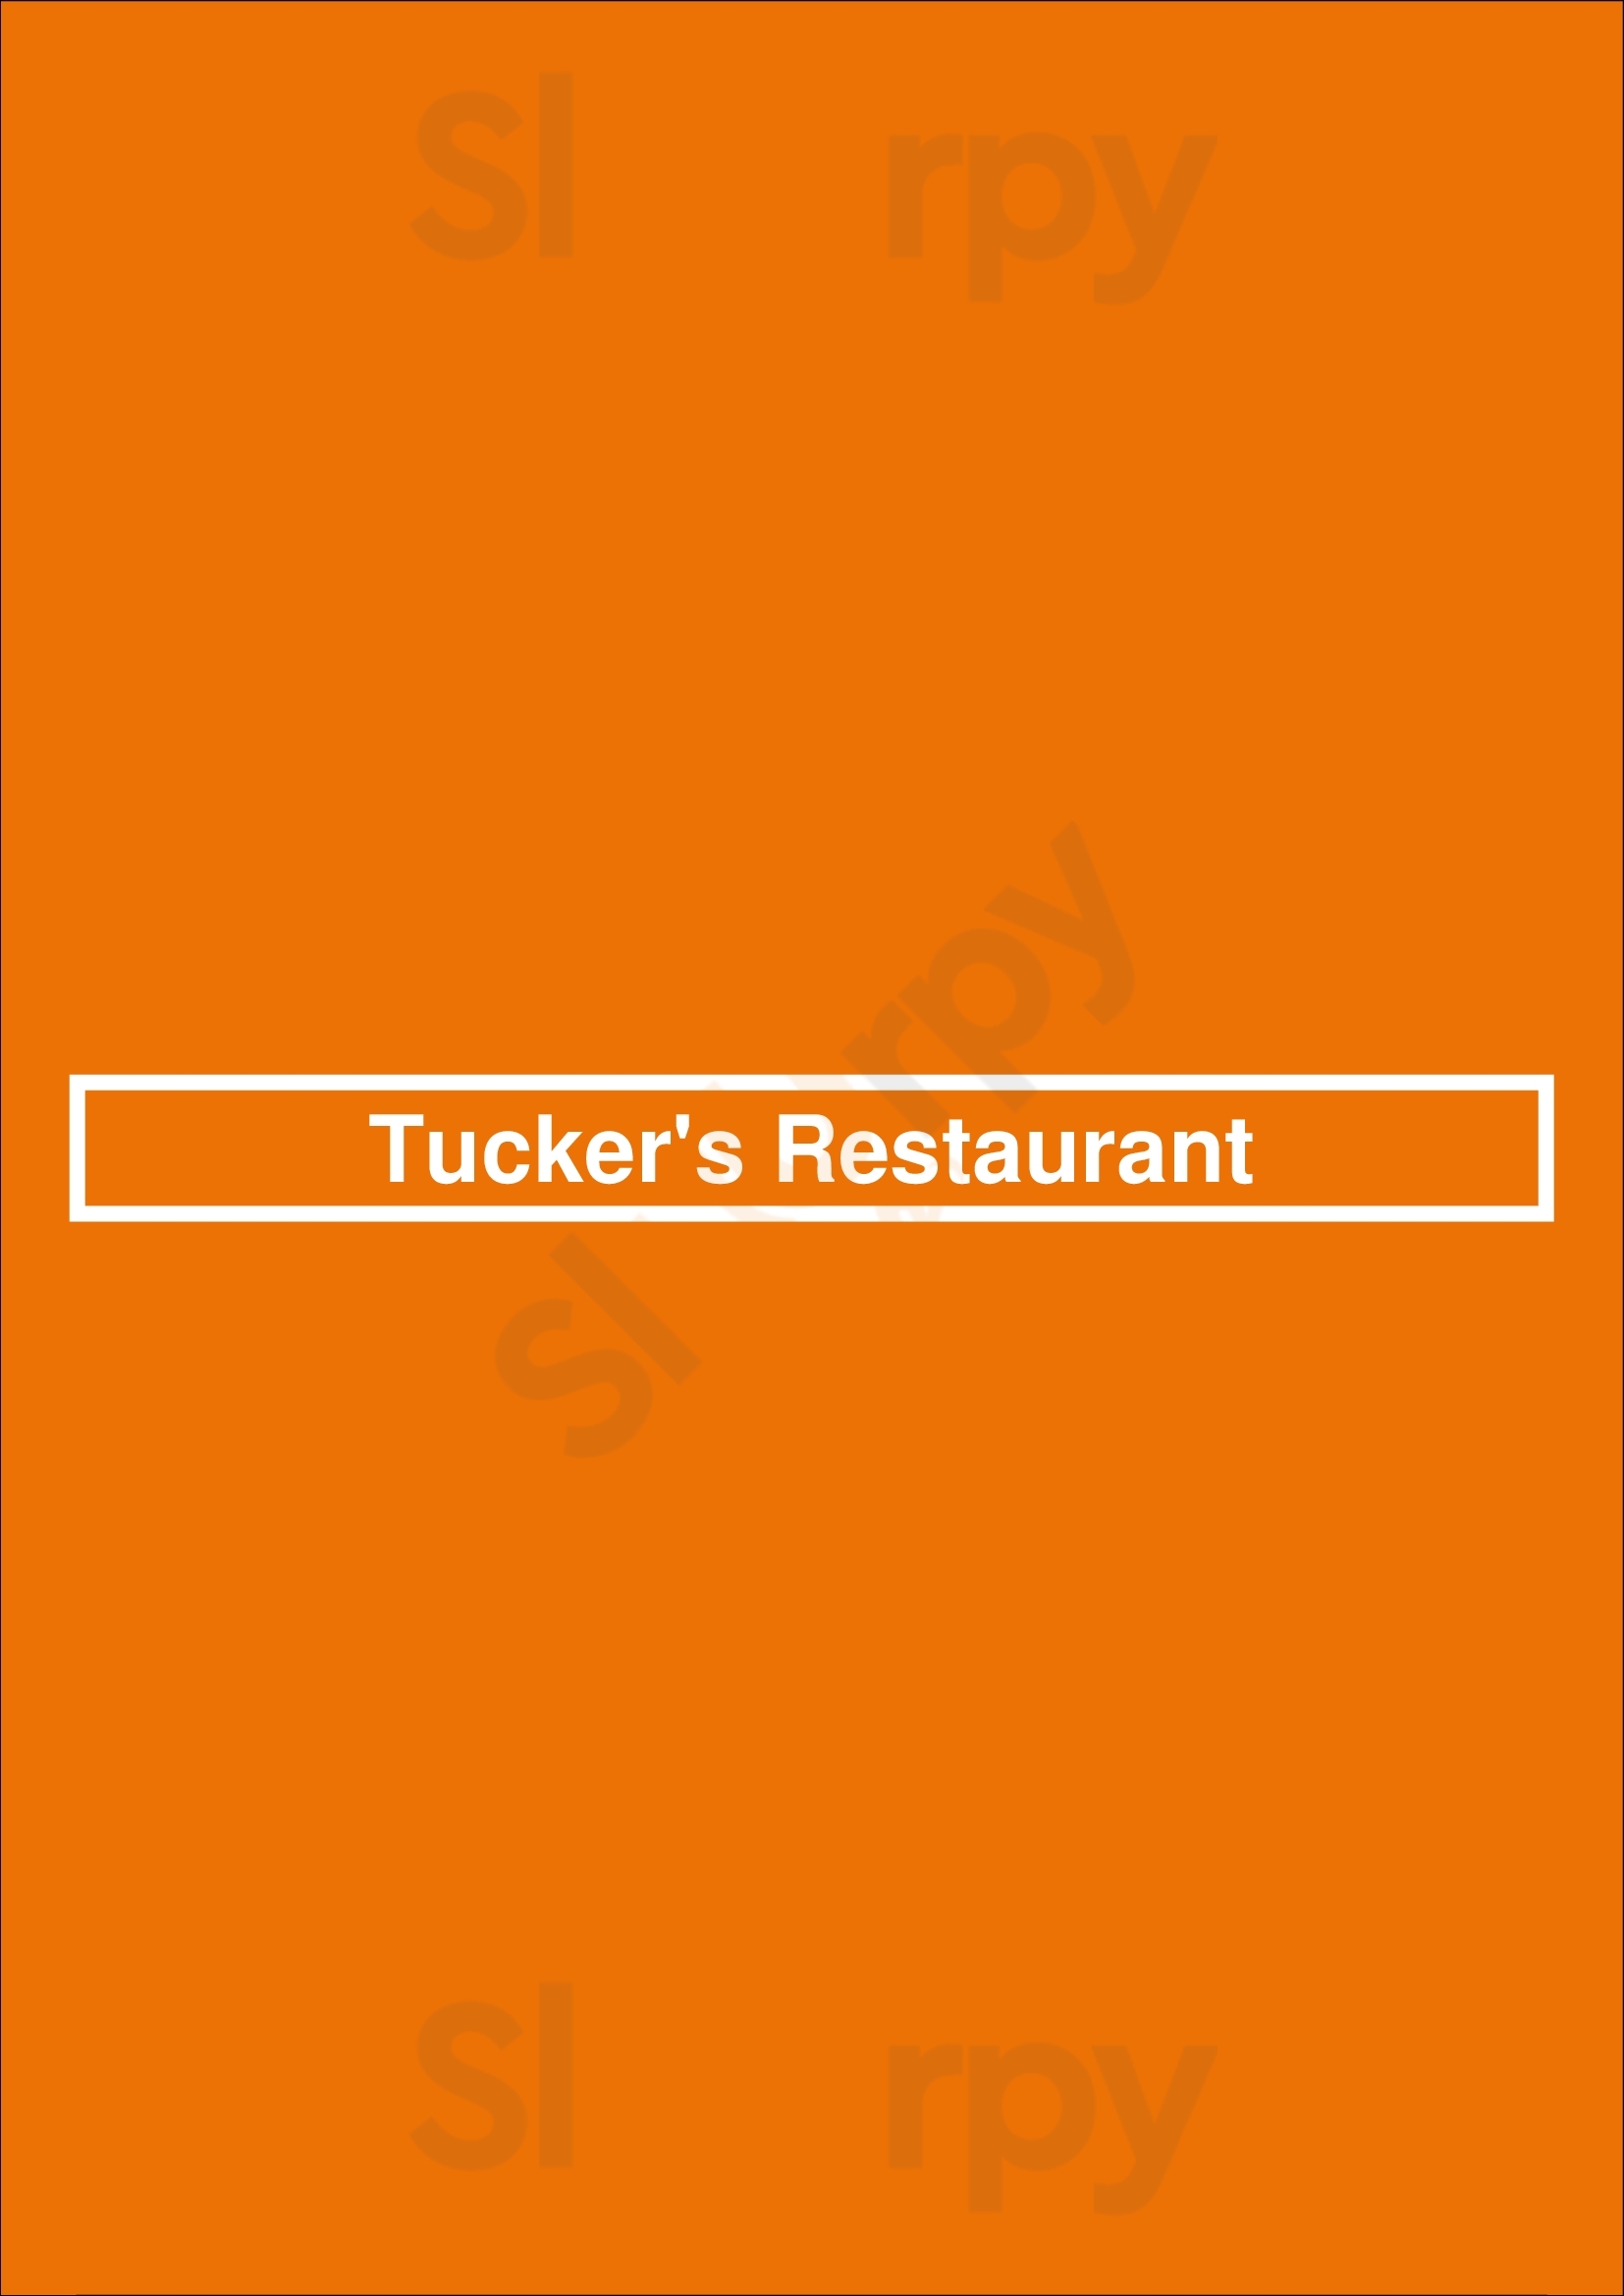 Tucker's Restaurant Cincinnati Menu - 1